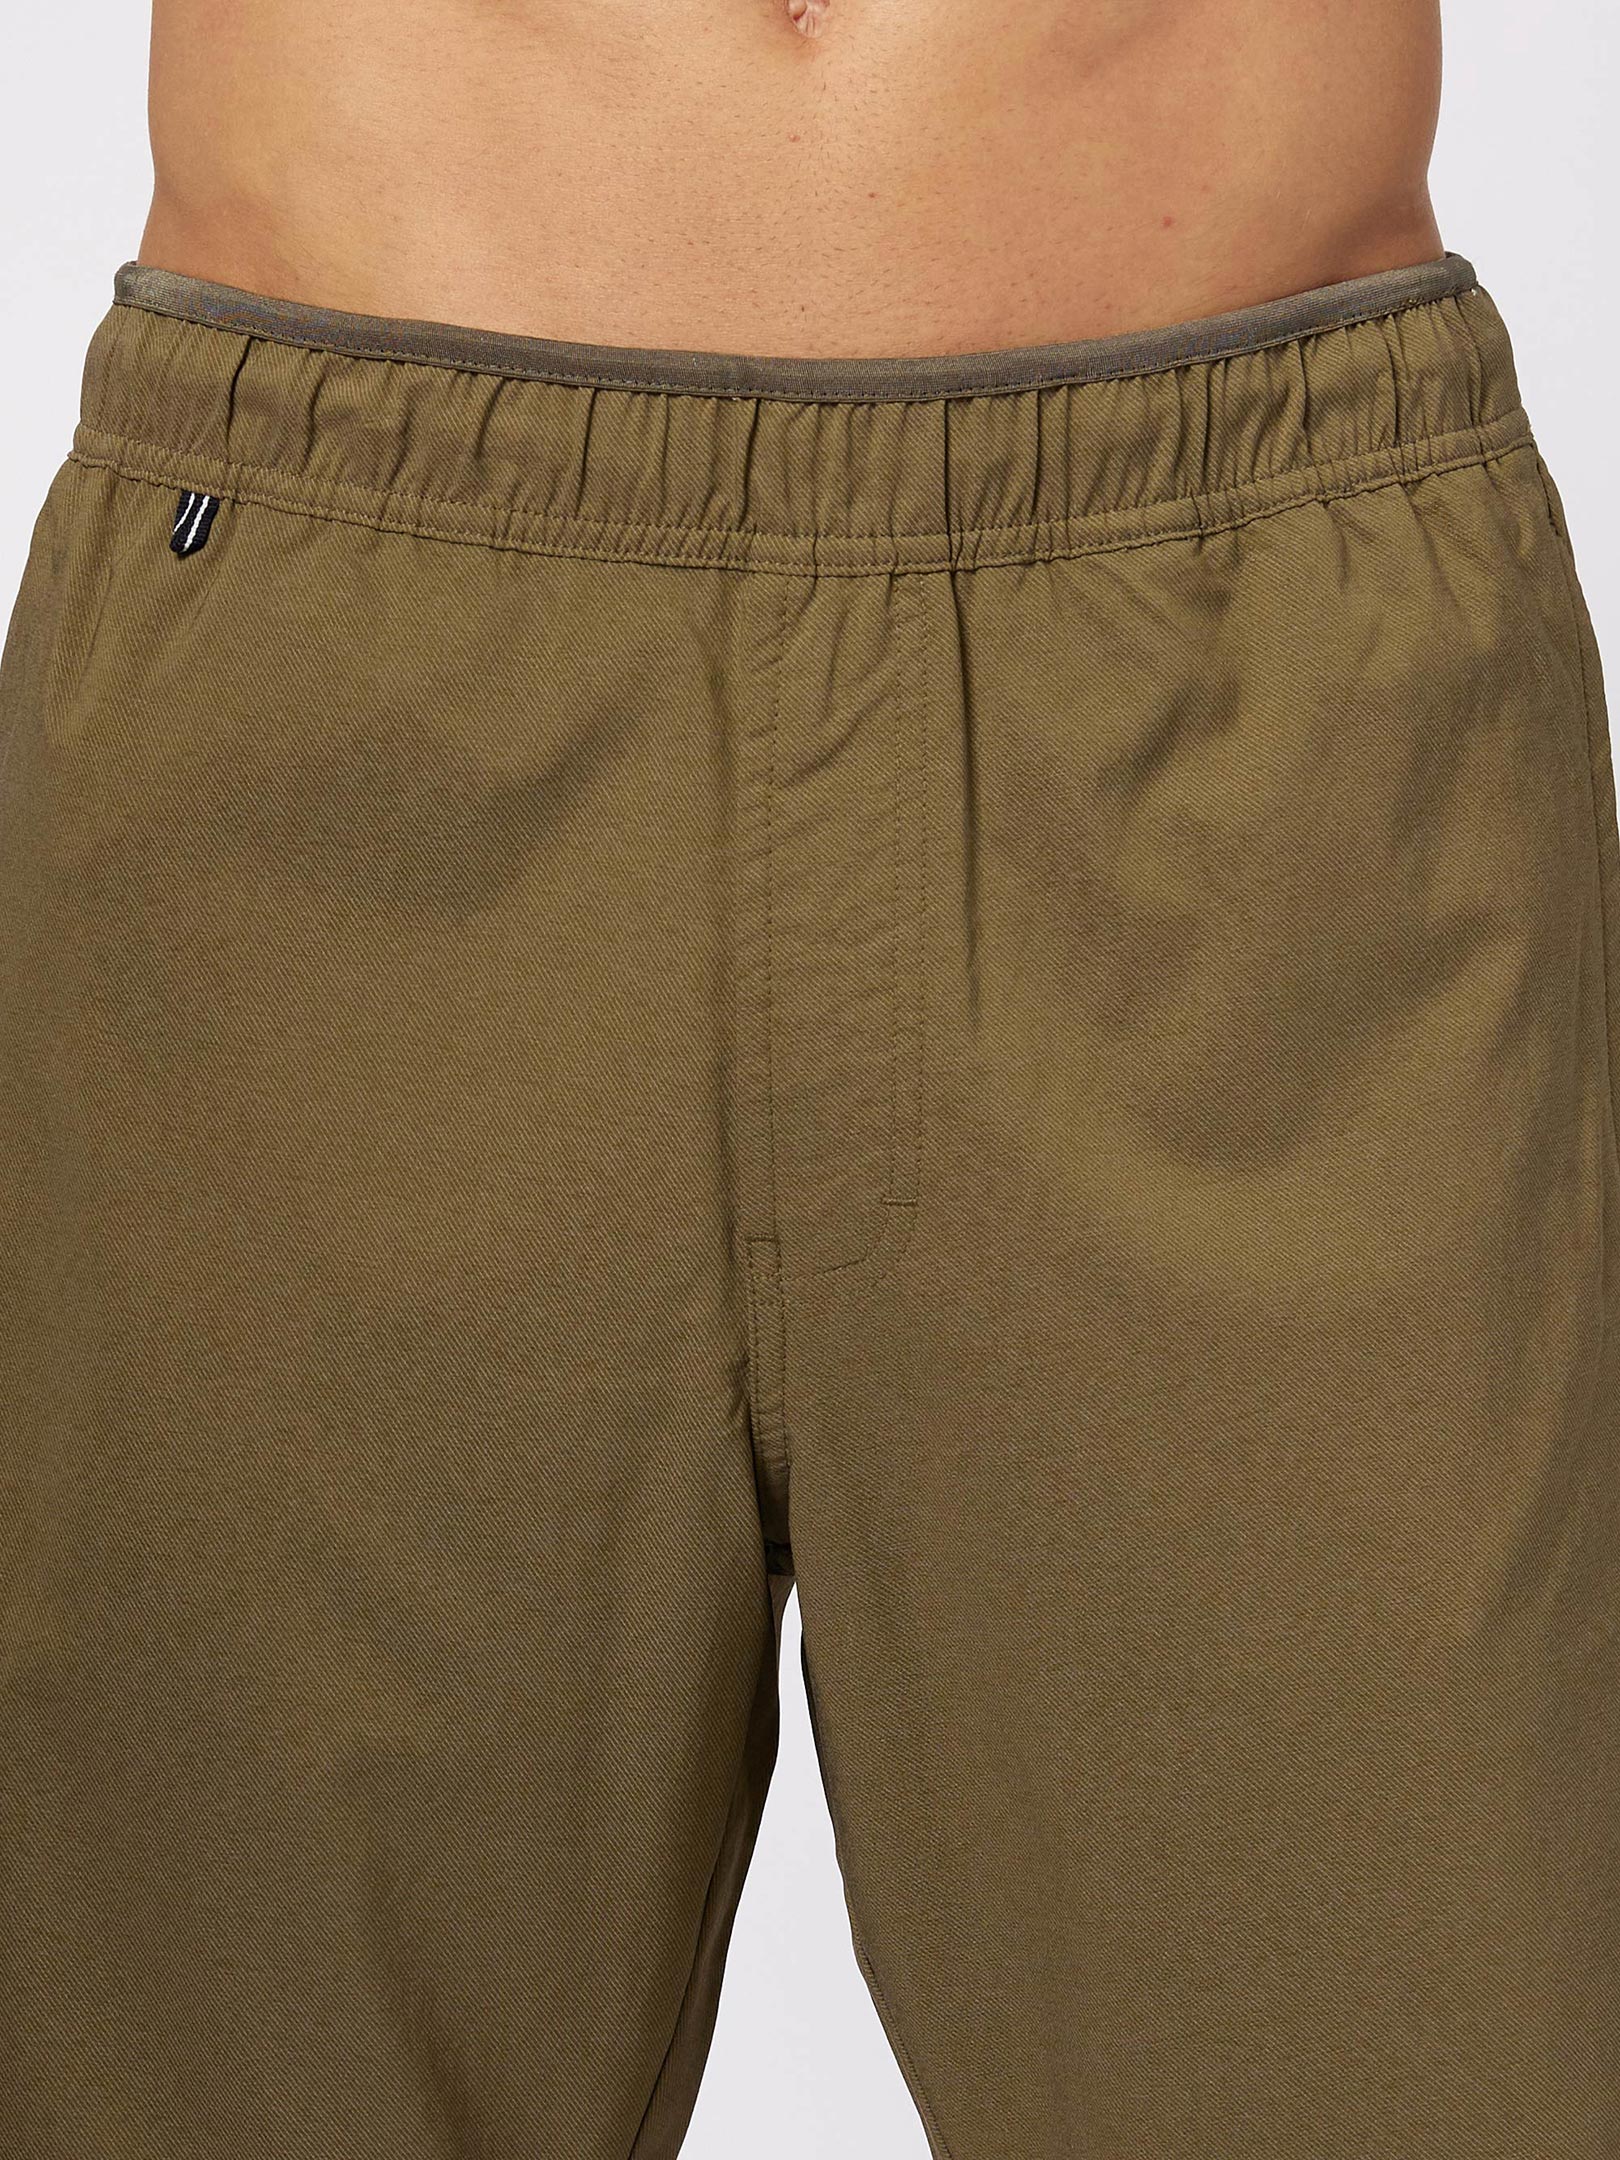 Canyon E-Waist Shorts -  | Voyager Goods